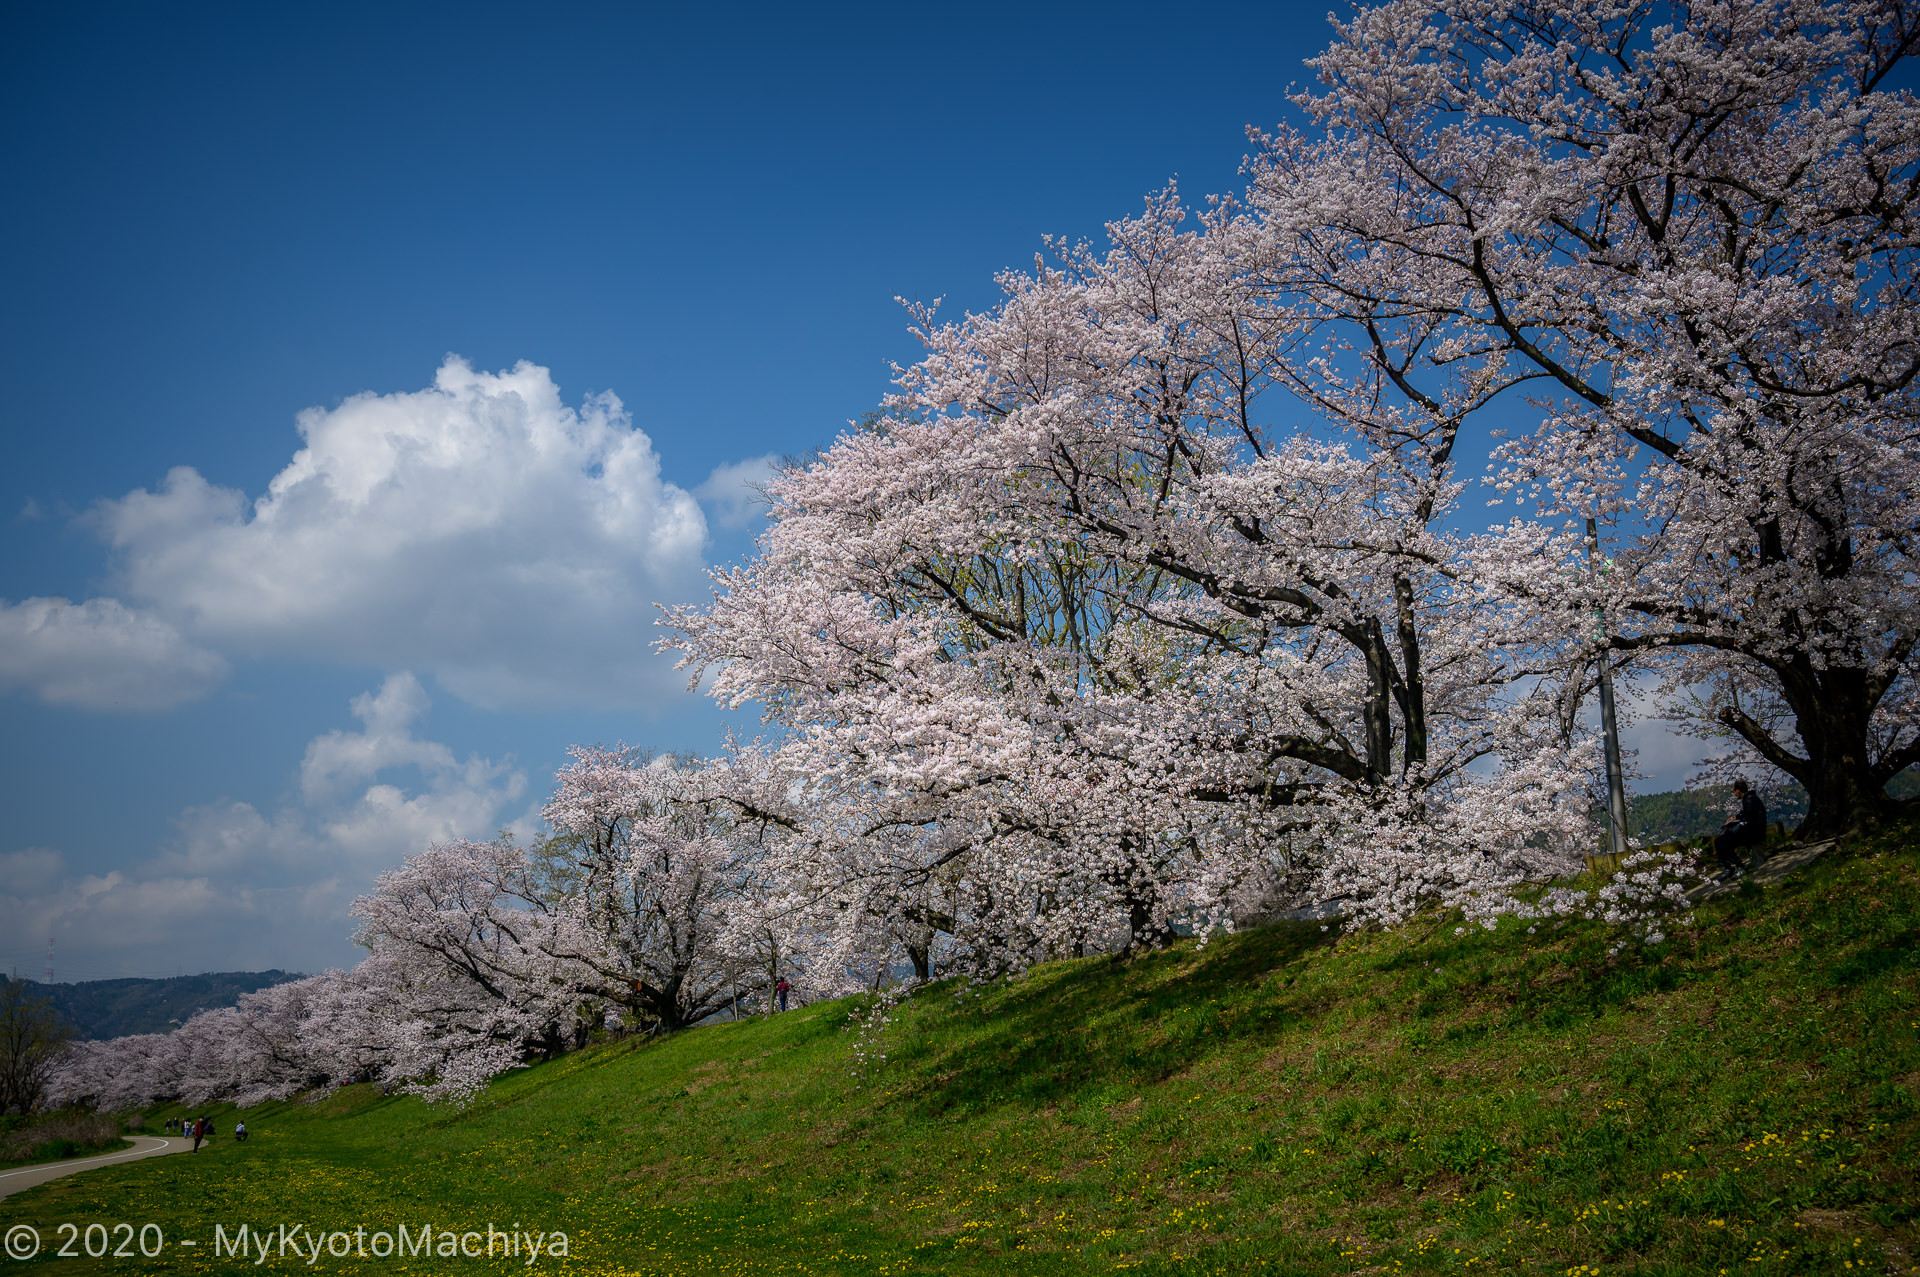 Cherry blossoms at Sewaritei, Yodo River, Kyoto